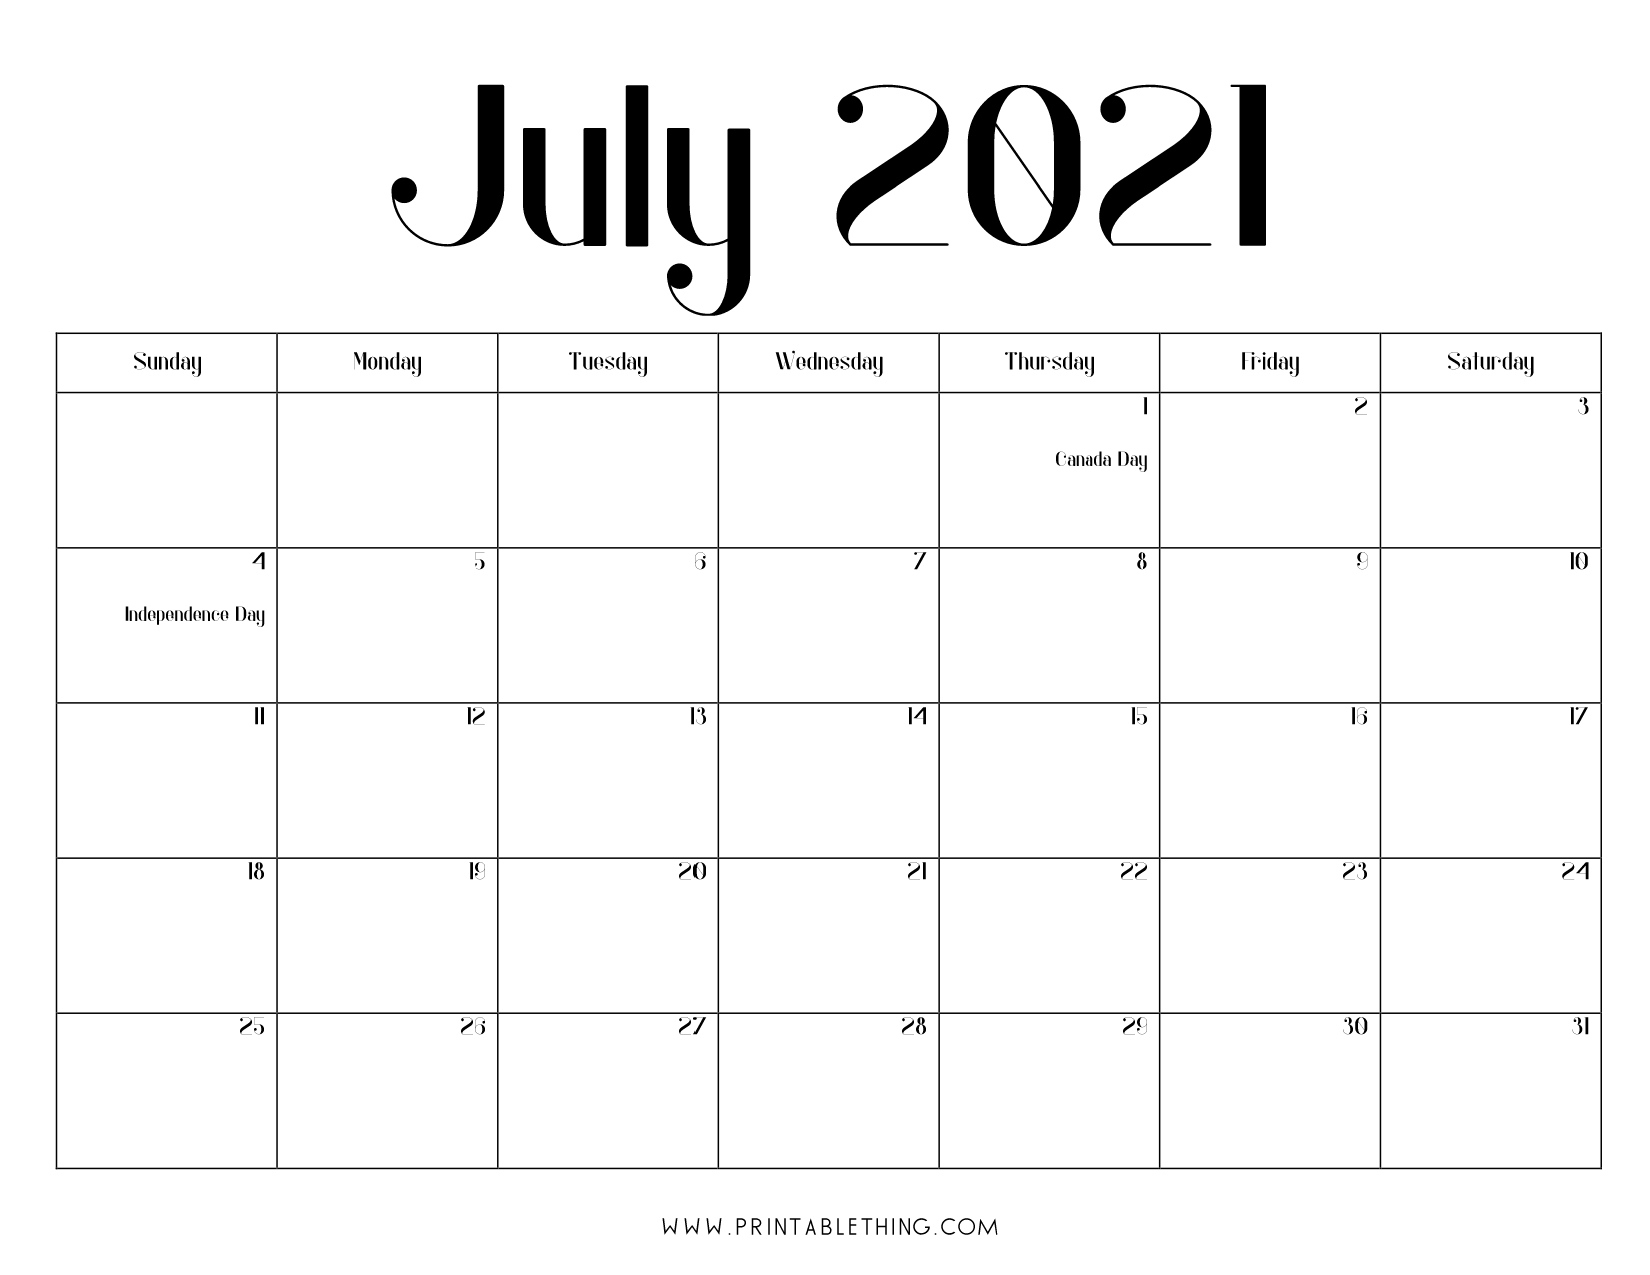 July 2021 Calendar Pdf, July 2021 Calendar Image, Print Pdf &amp; Image July 2021 Calendar Free Printable